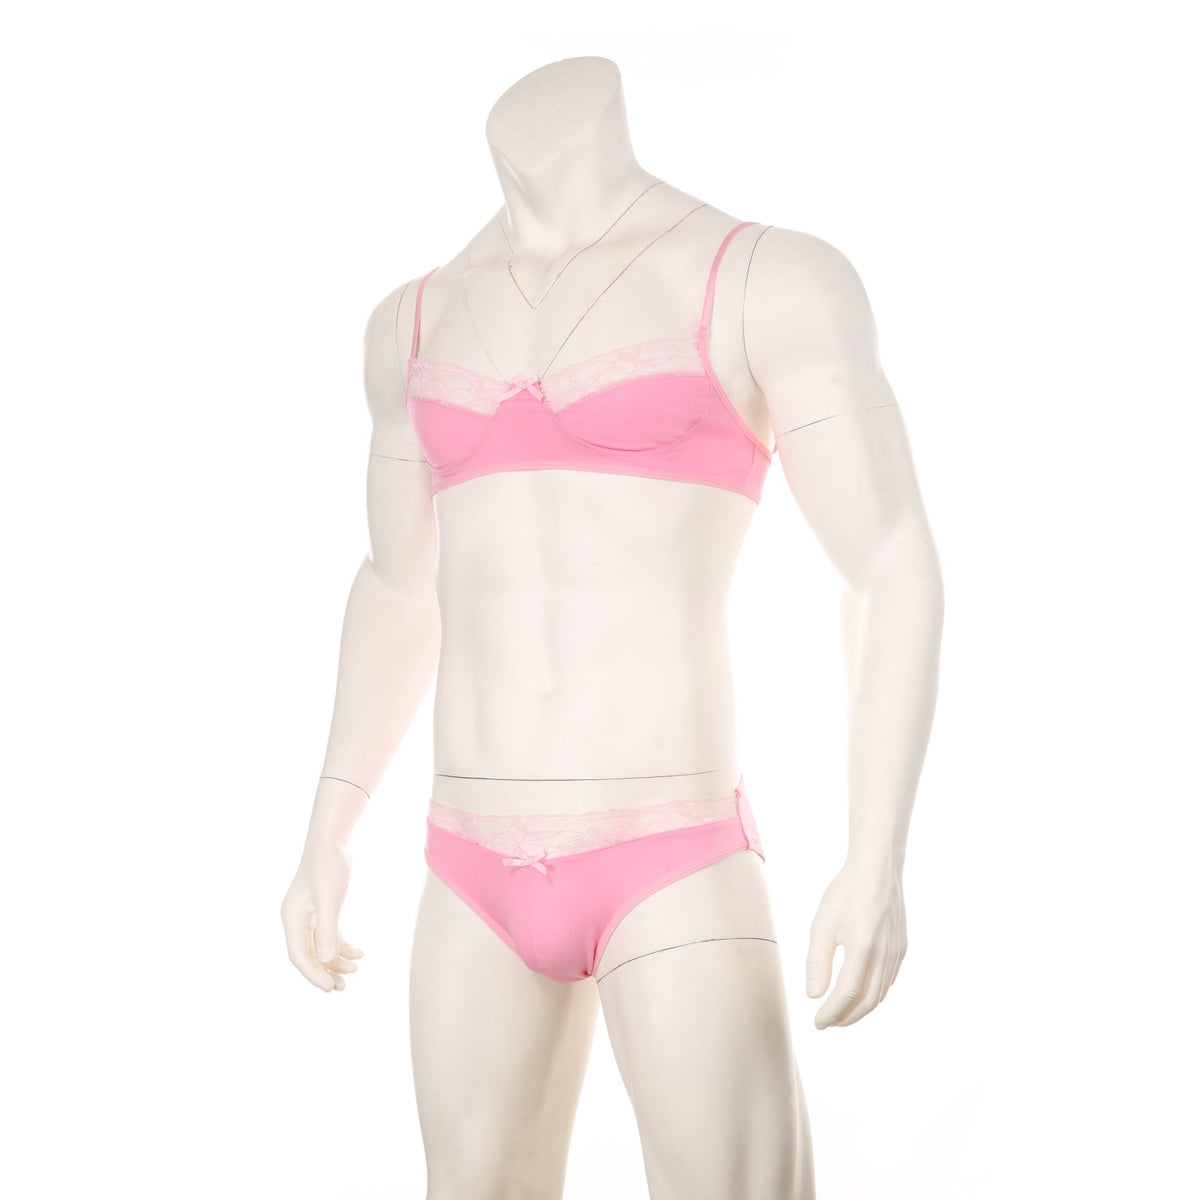 Fashion (Pink)Summer Men Two Pieces Lingerie Bra Panties Set